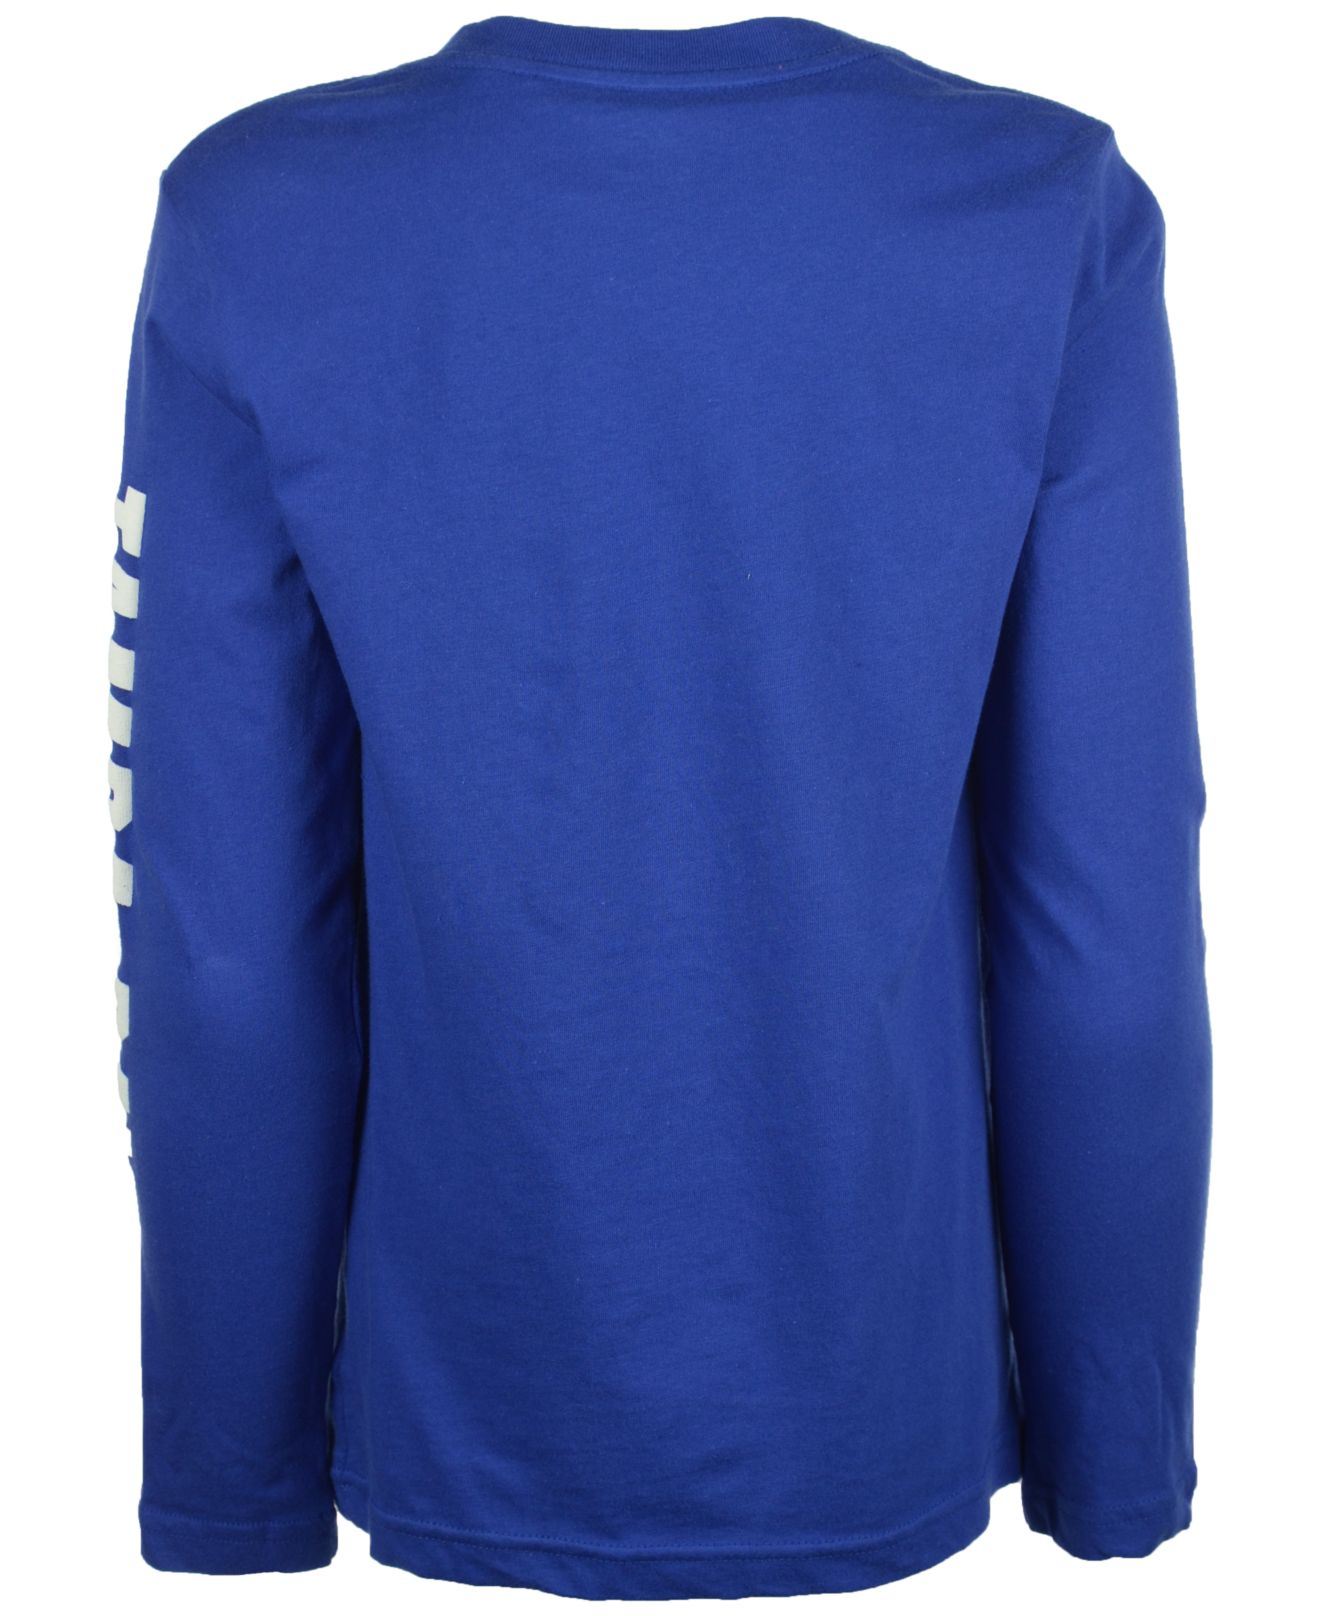 Lyst - Reebok Boys' Long-Sleeve Tampa Bay Lightning Blinder T-Shirt in ...